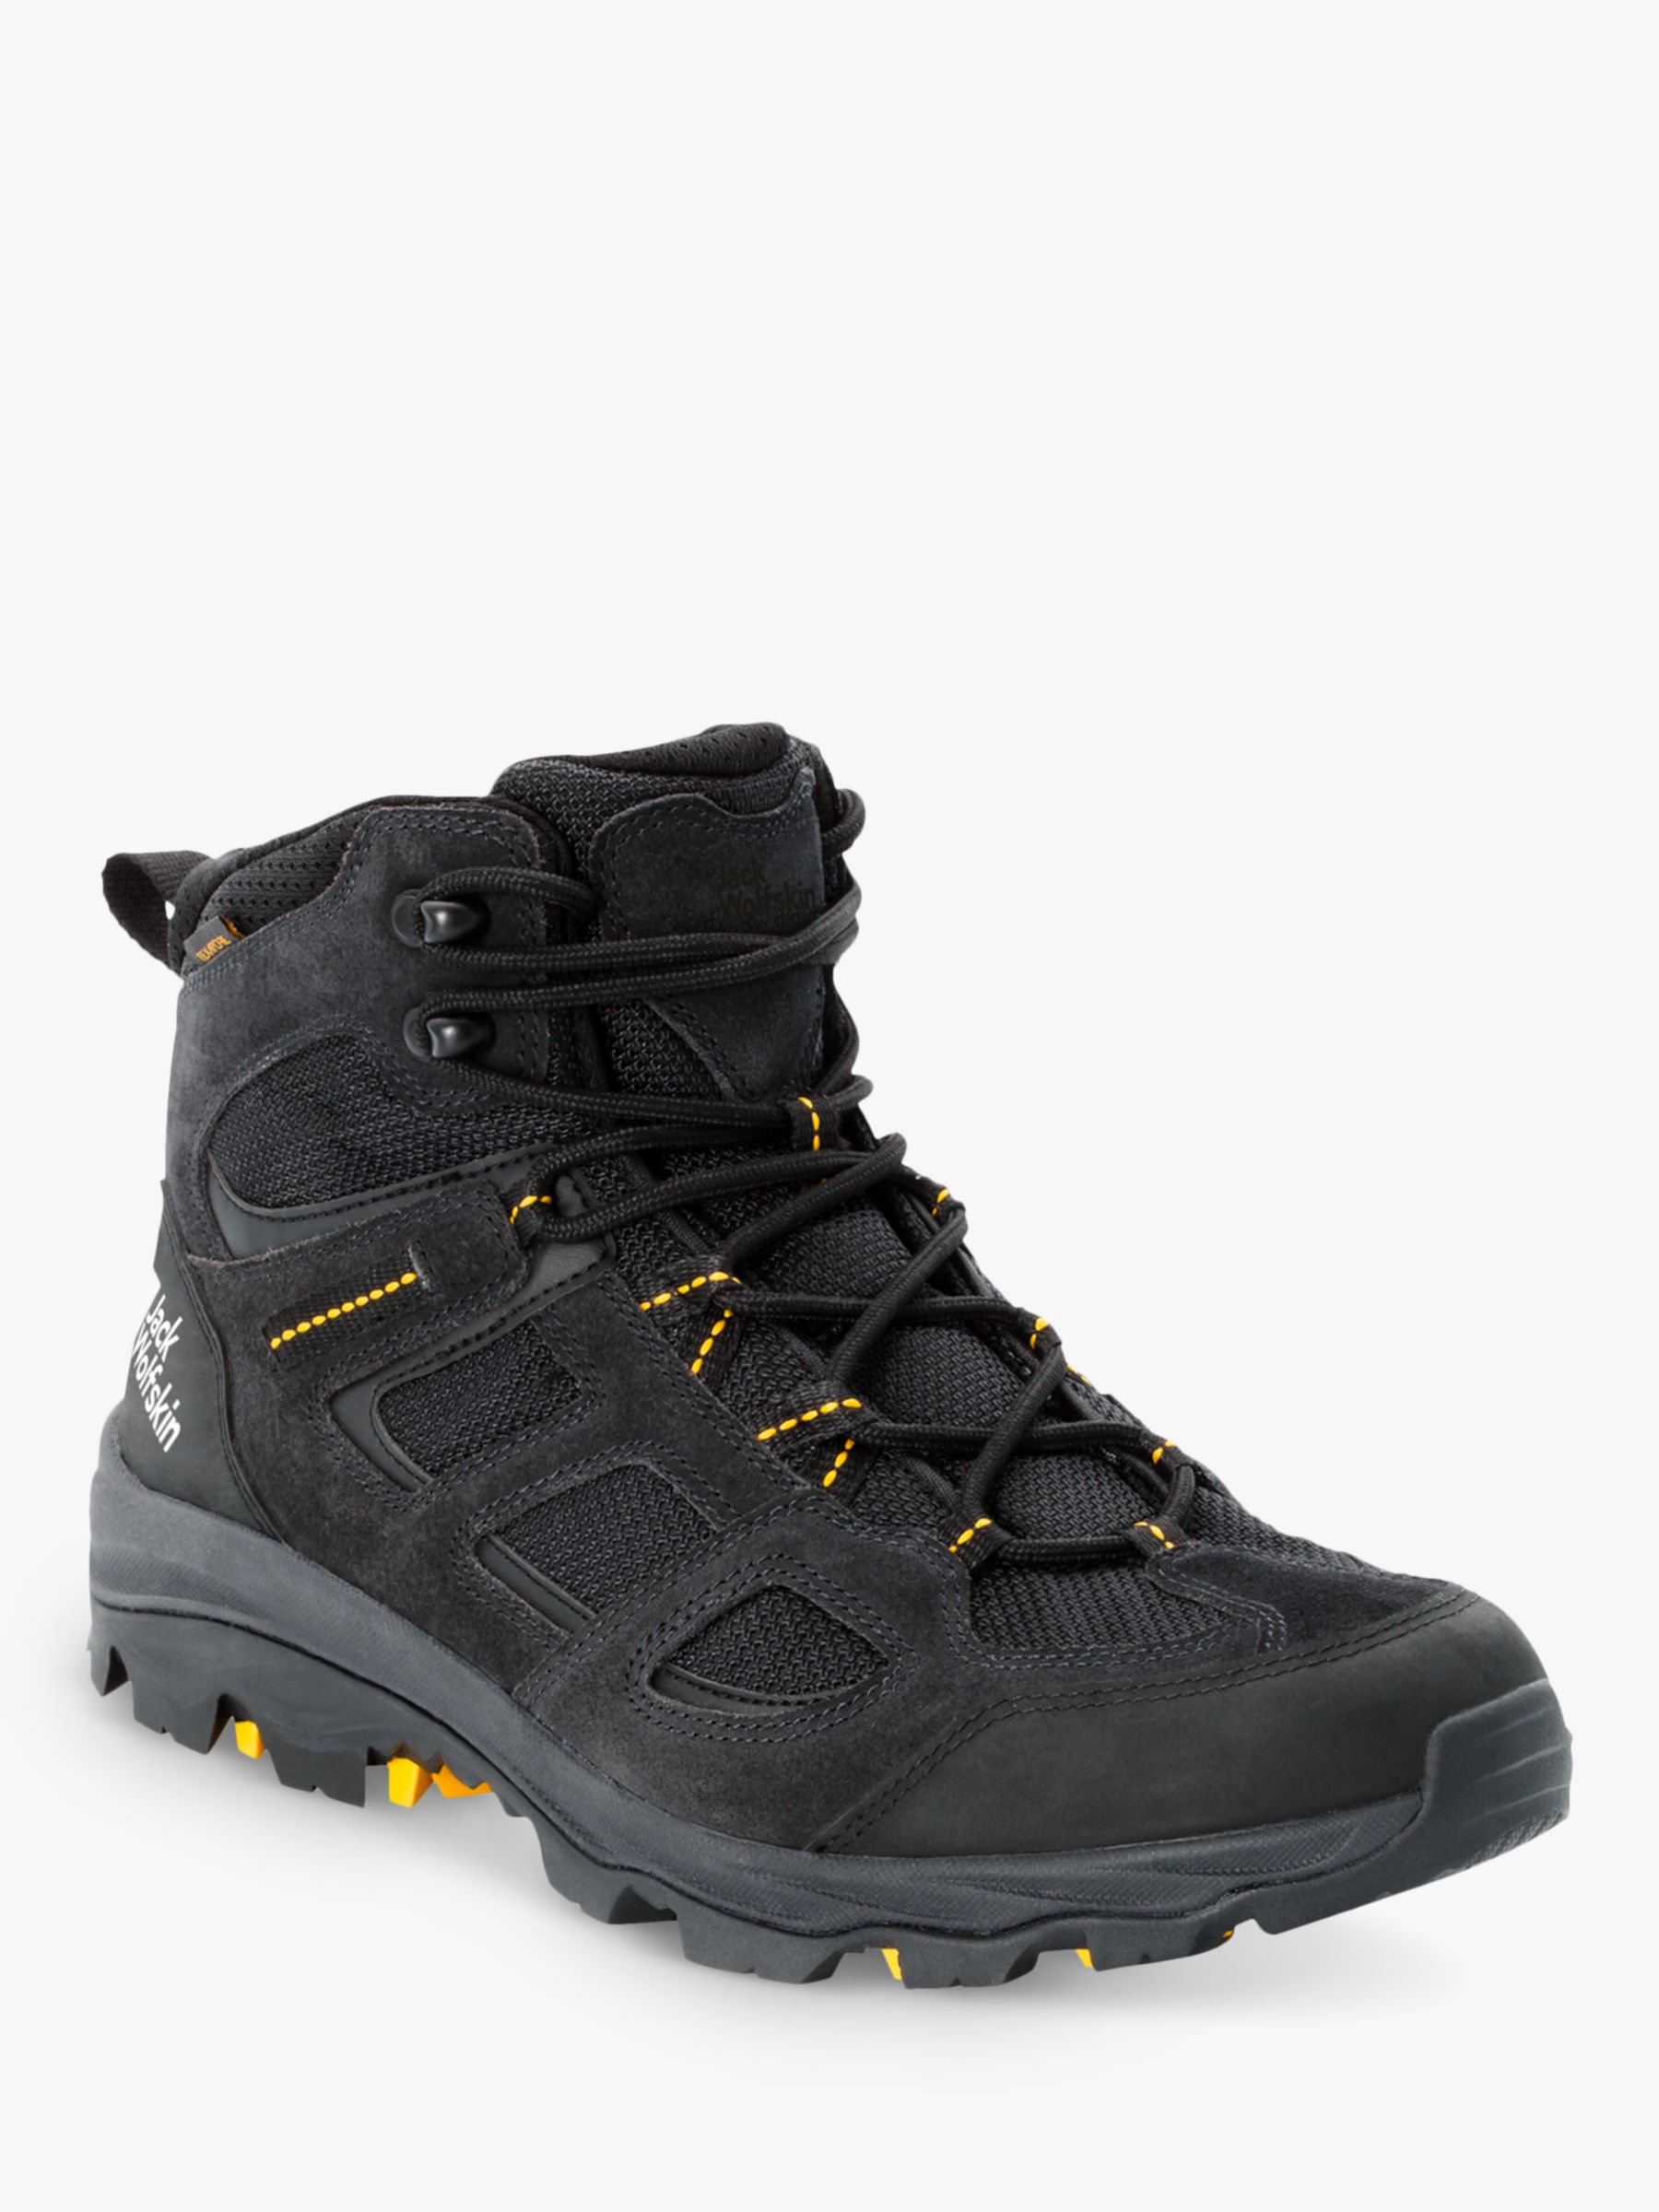 Buy Jack Wolfskin Vojo 3 Texapore Men's Waterproof Walking Boots, Black/Burly Yellow Online at johnlewis.com